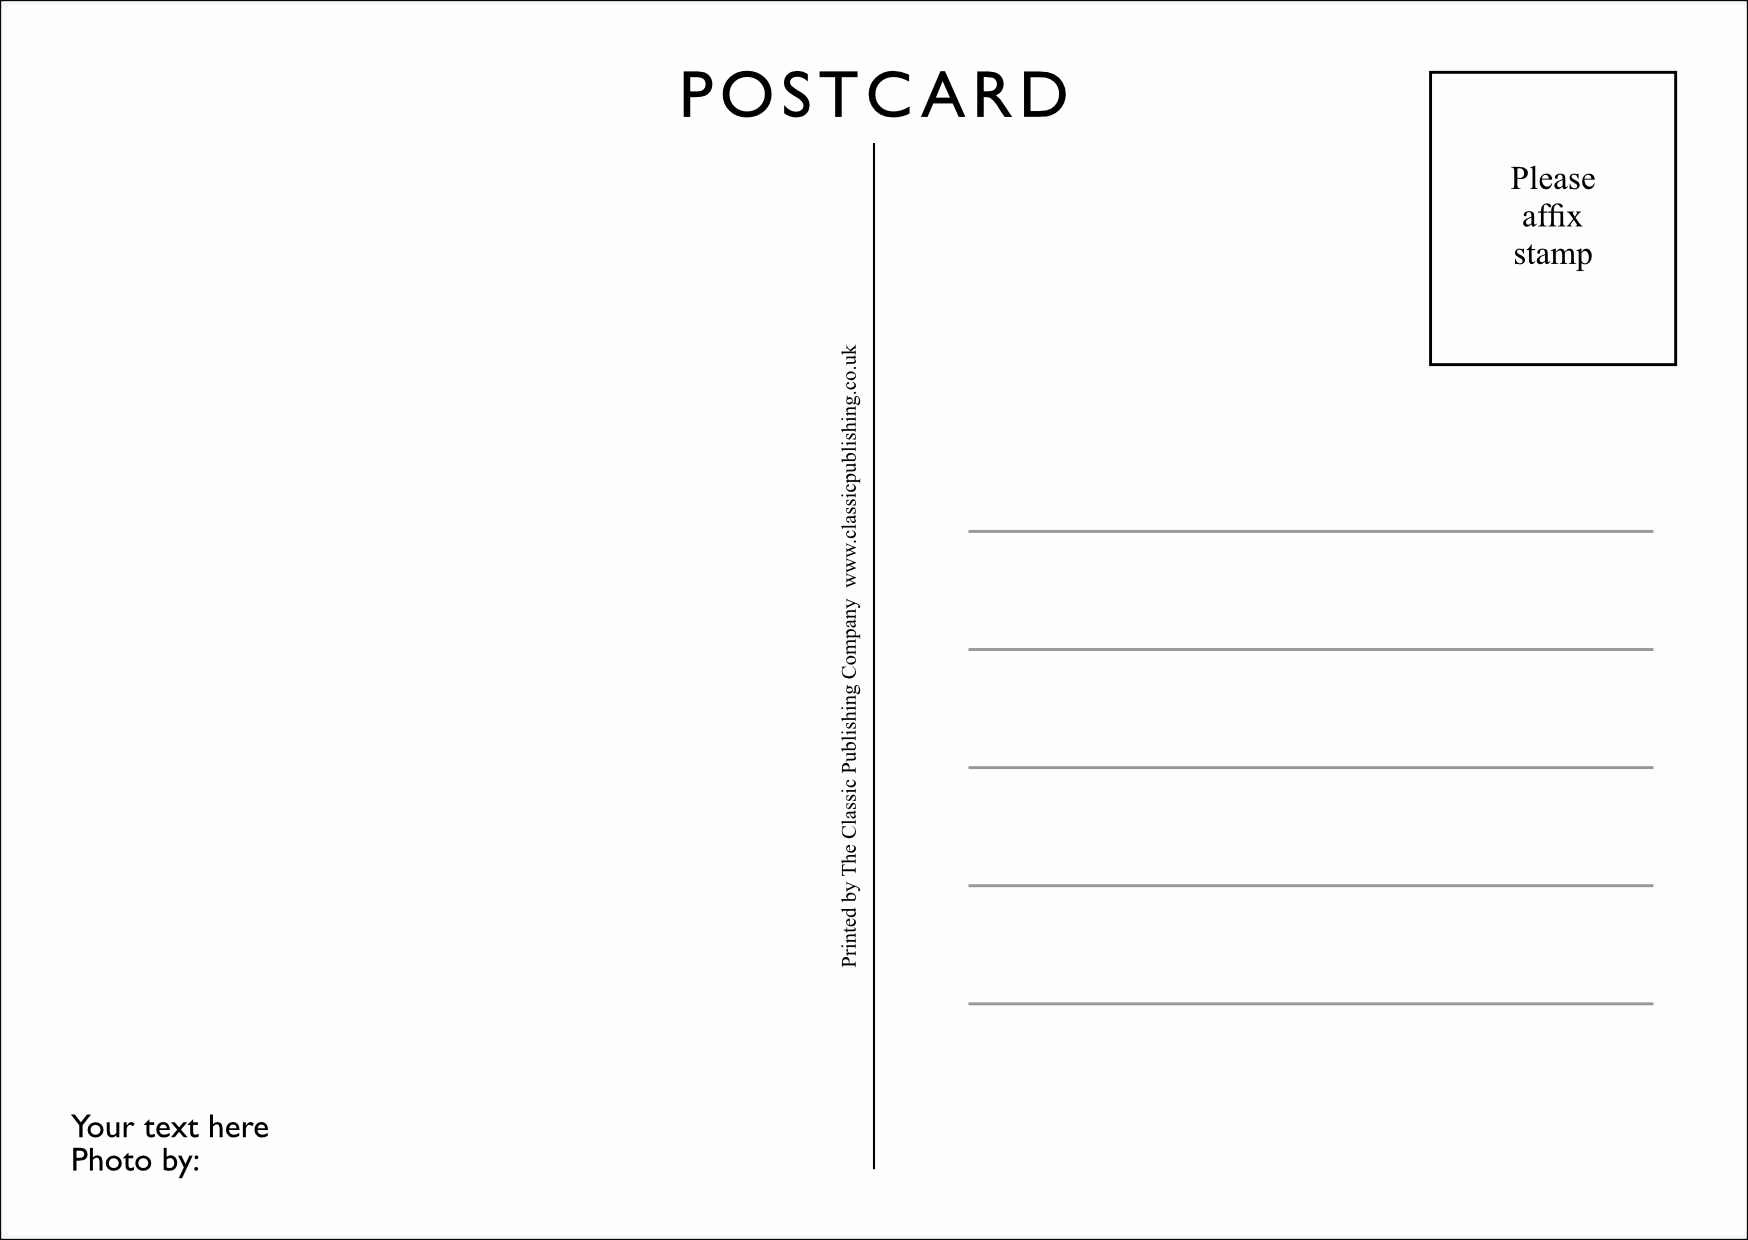 Standard printed postcard reverse